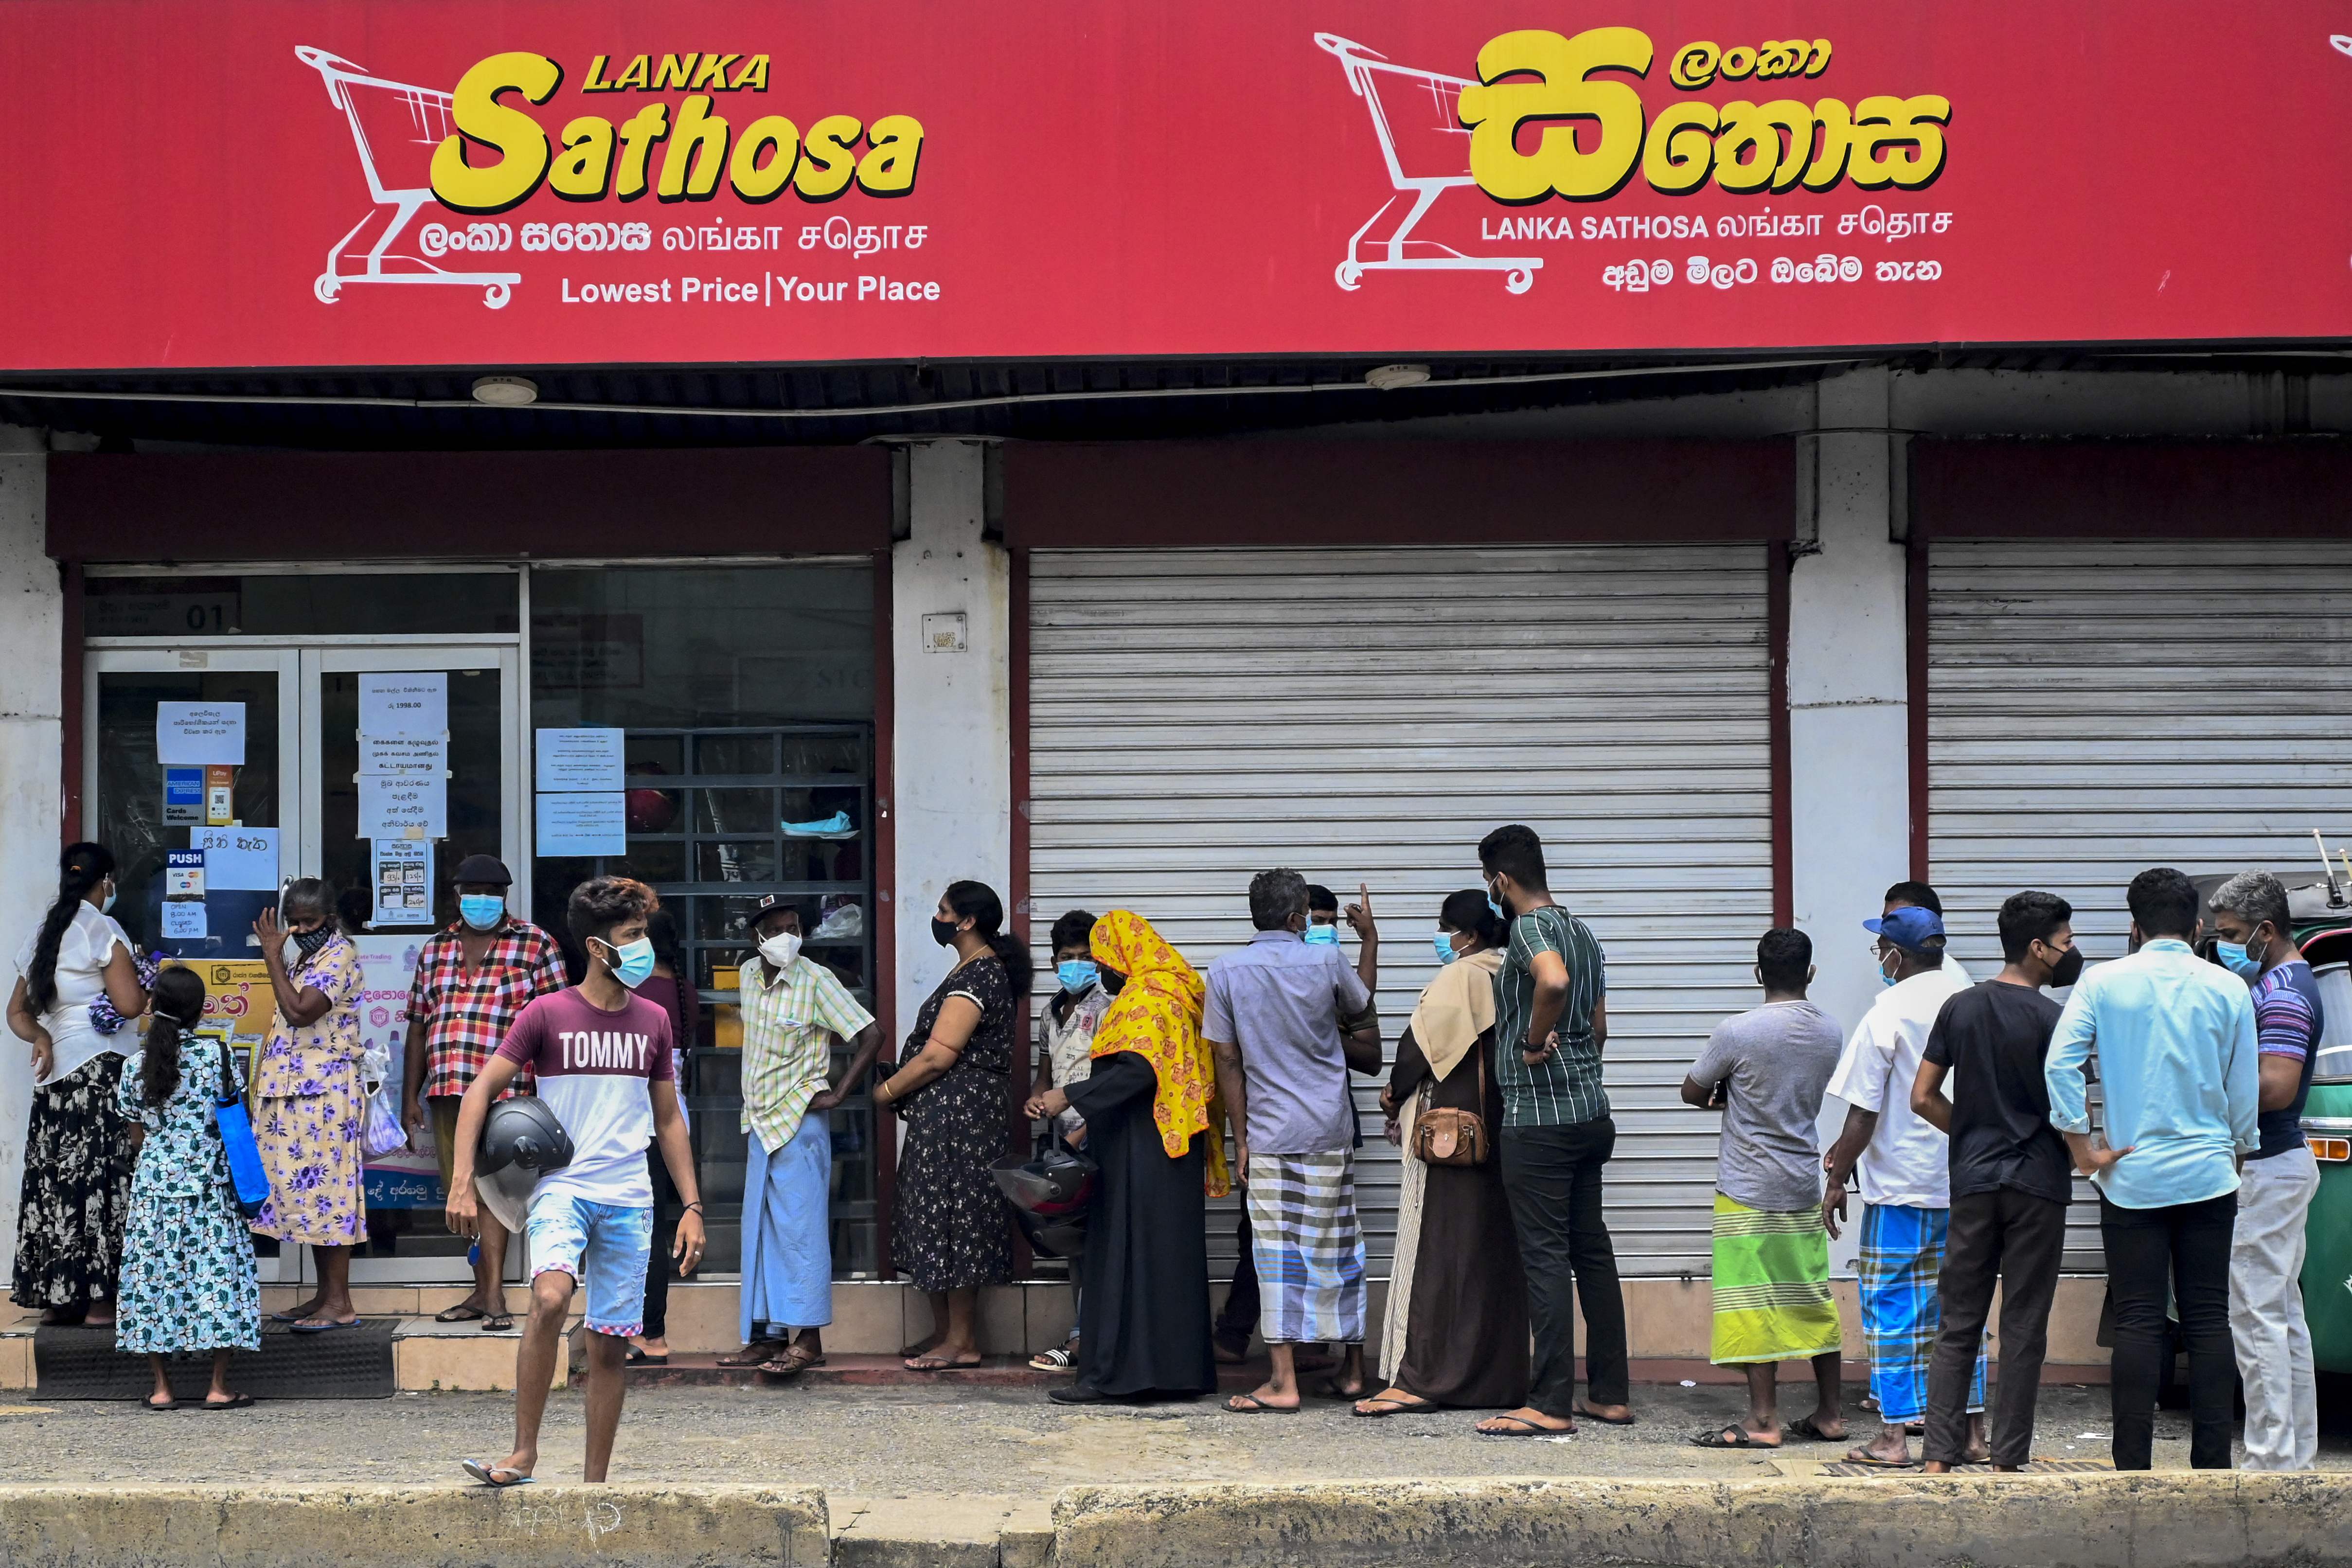 File: People line up outside a supermarket in Colombo, Sri Lanka.